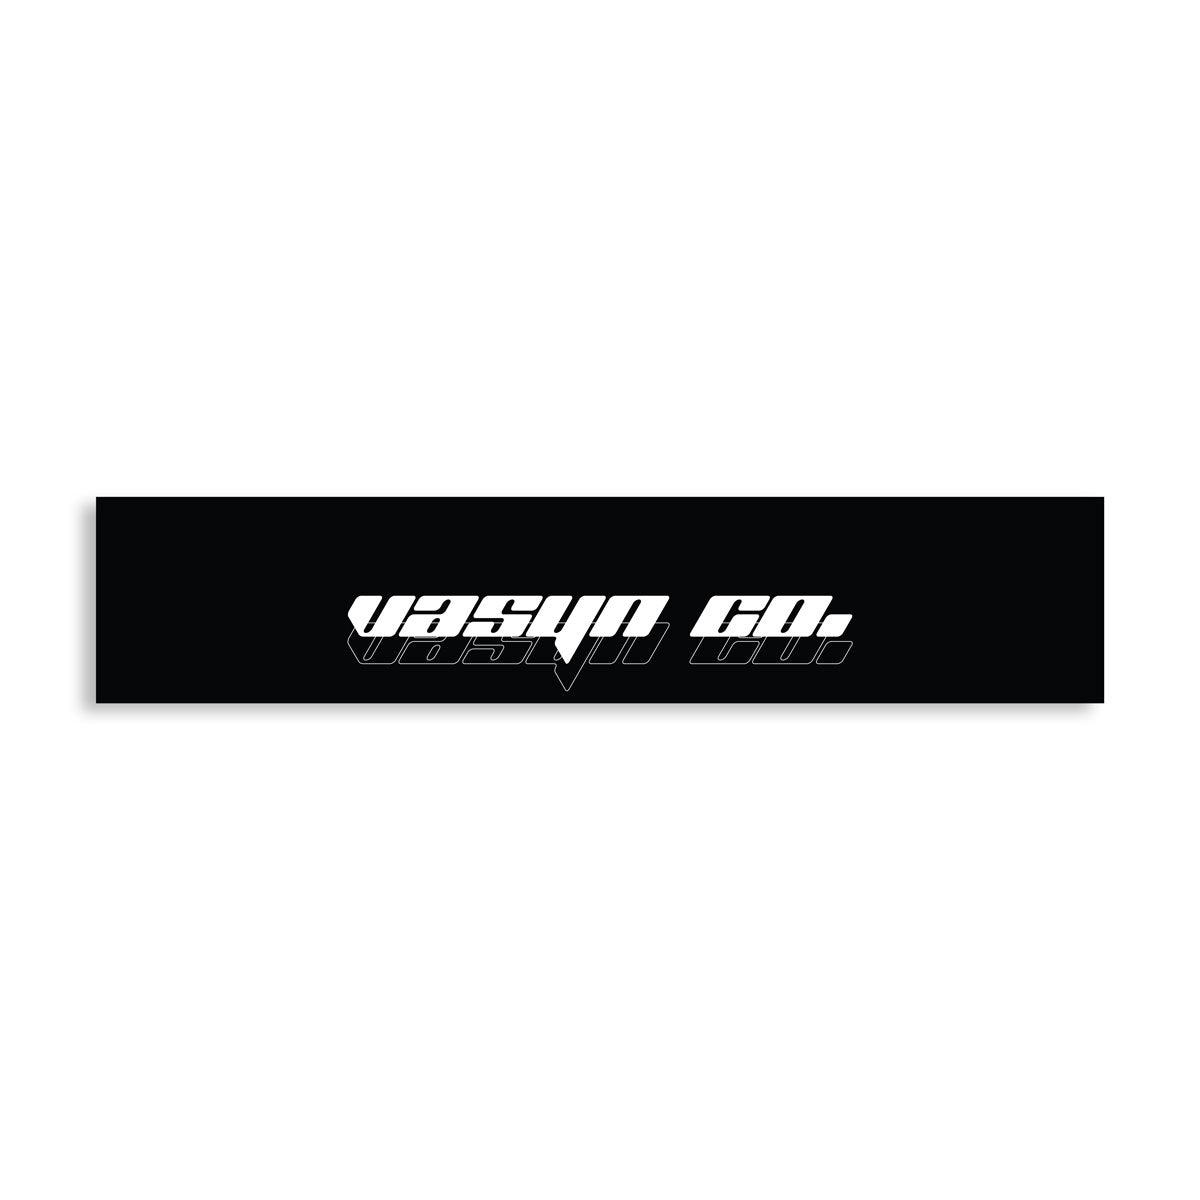 Vasyn Co. V3 Windshield Banner - Black